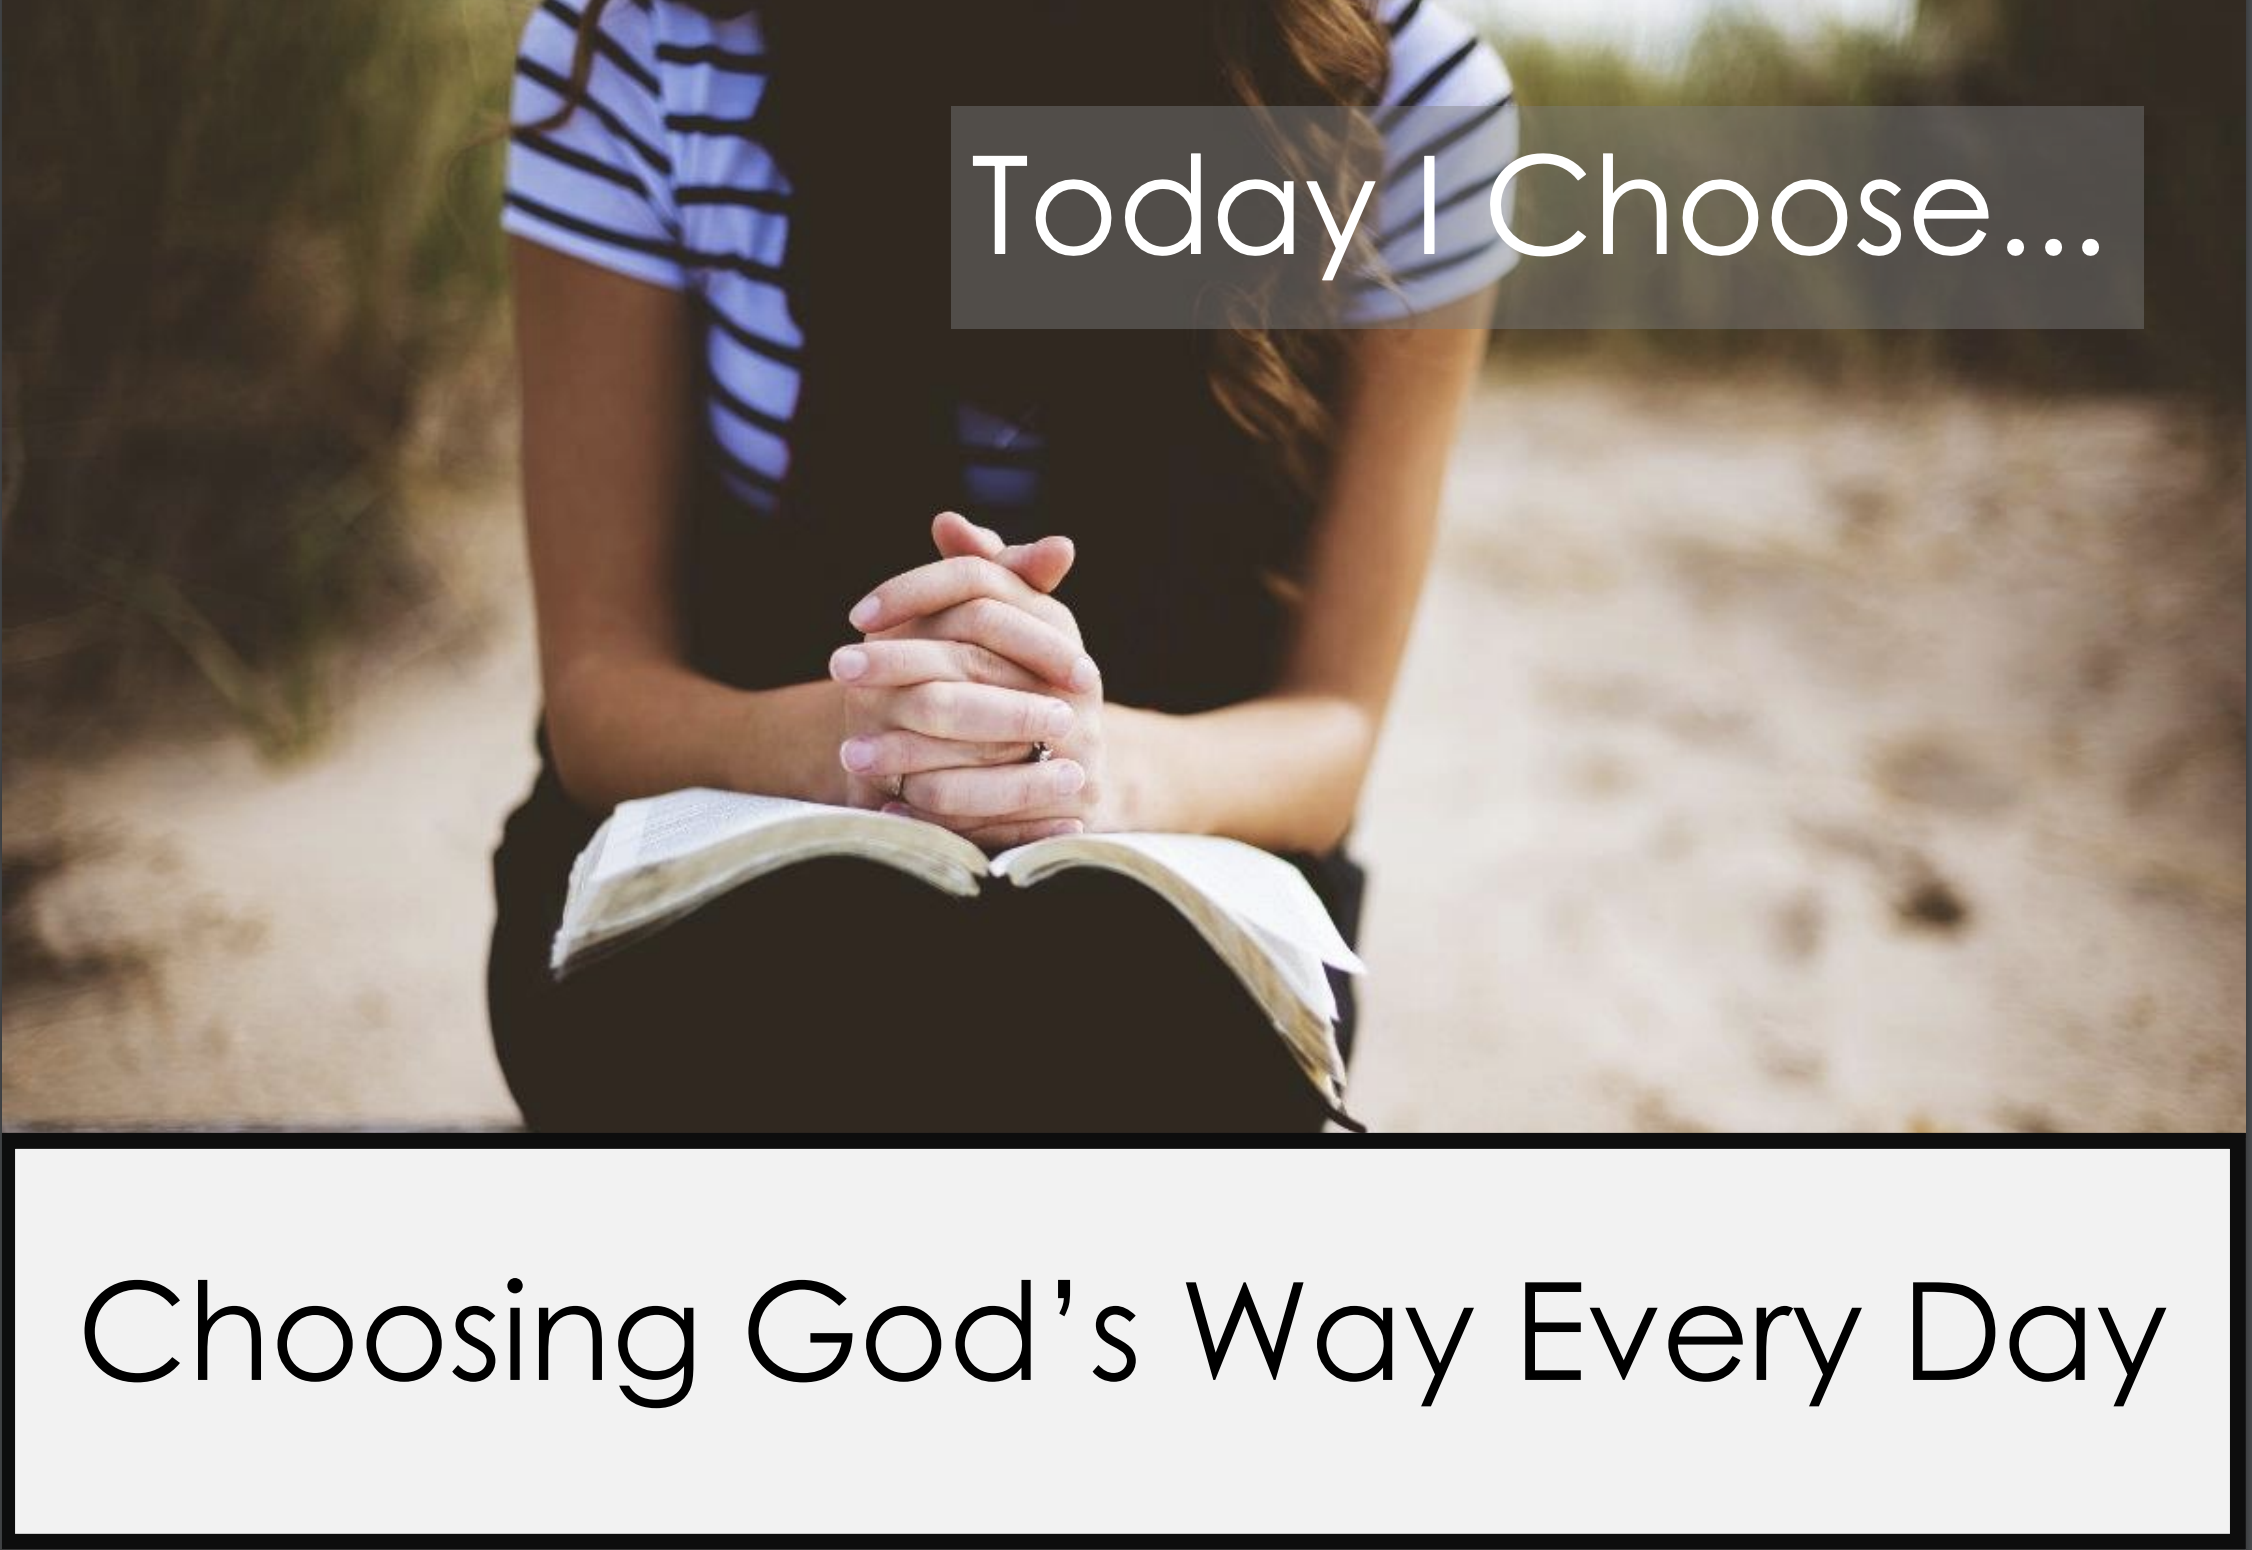 Choosing God's way